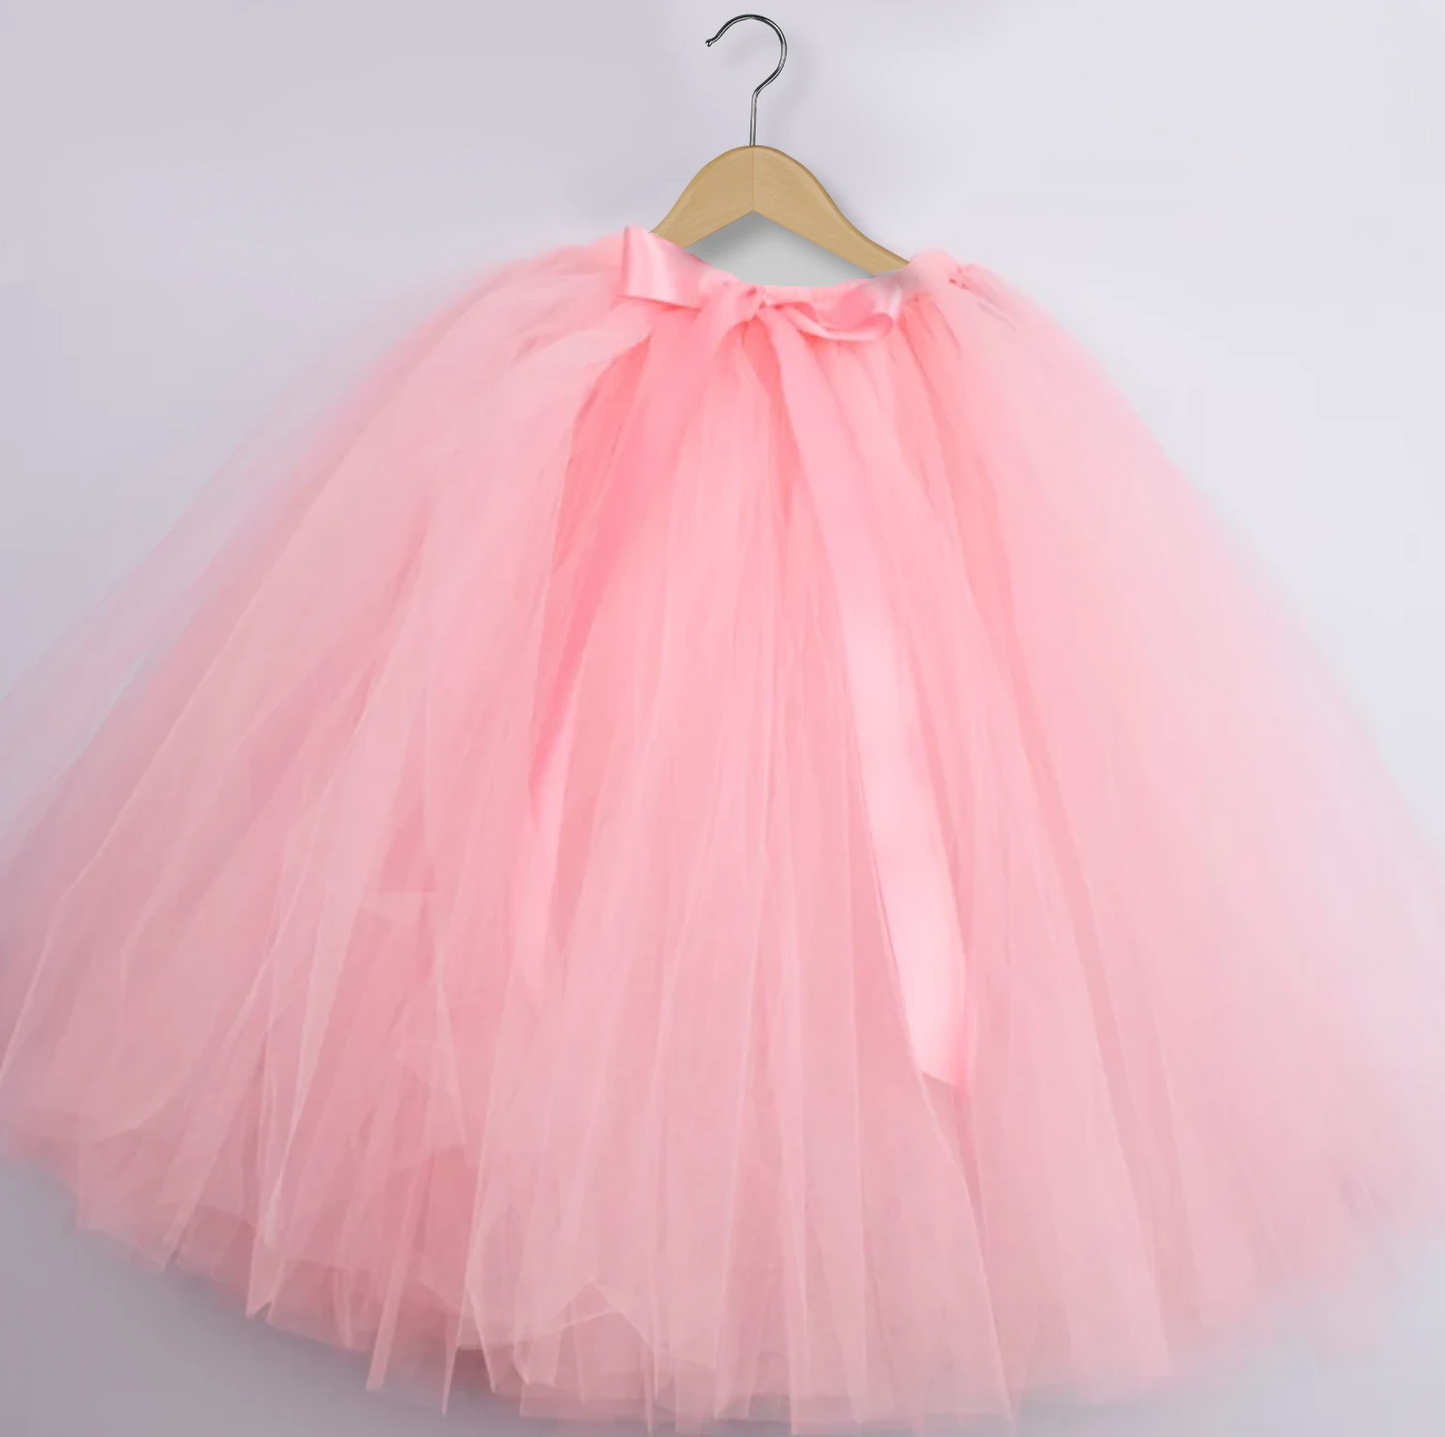 Paisley soft pink floor length tutu skirt